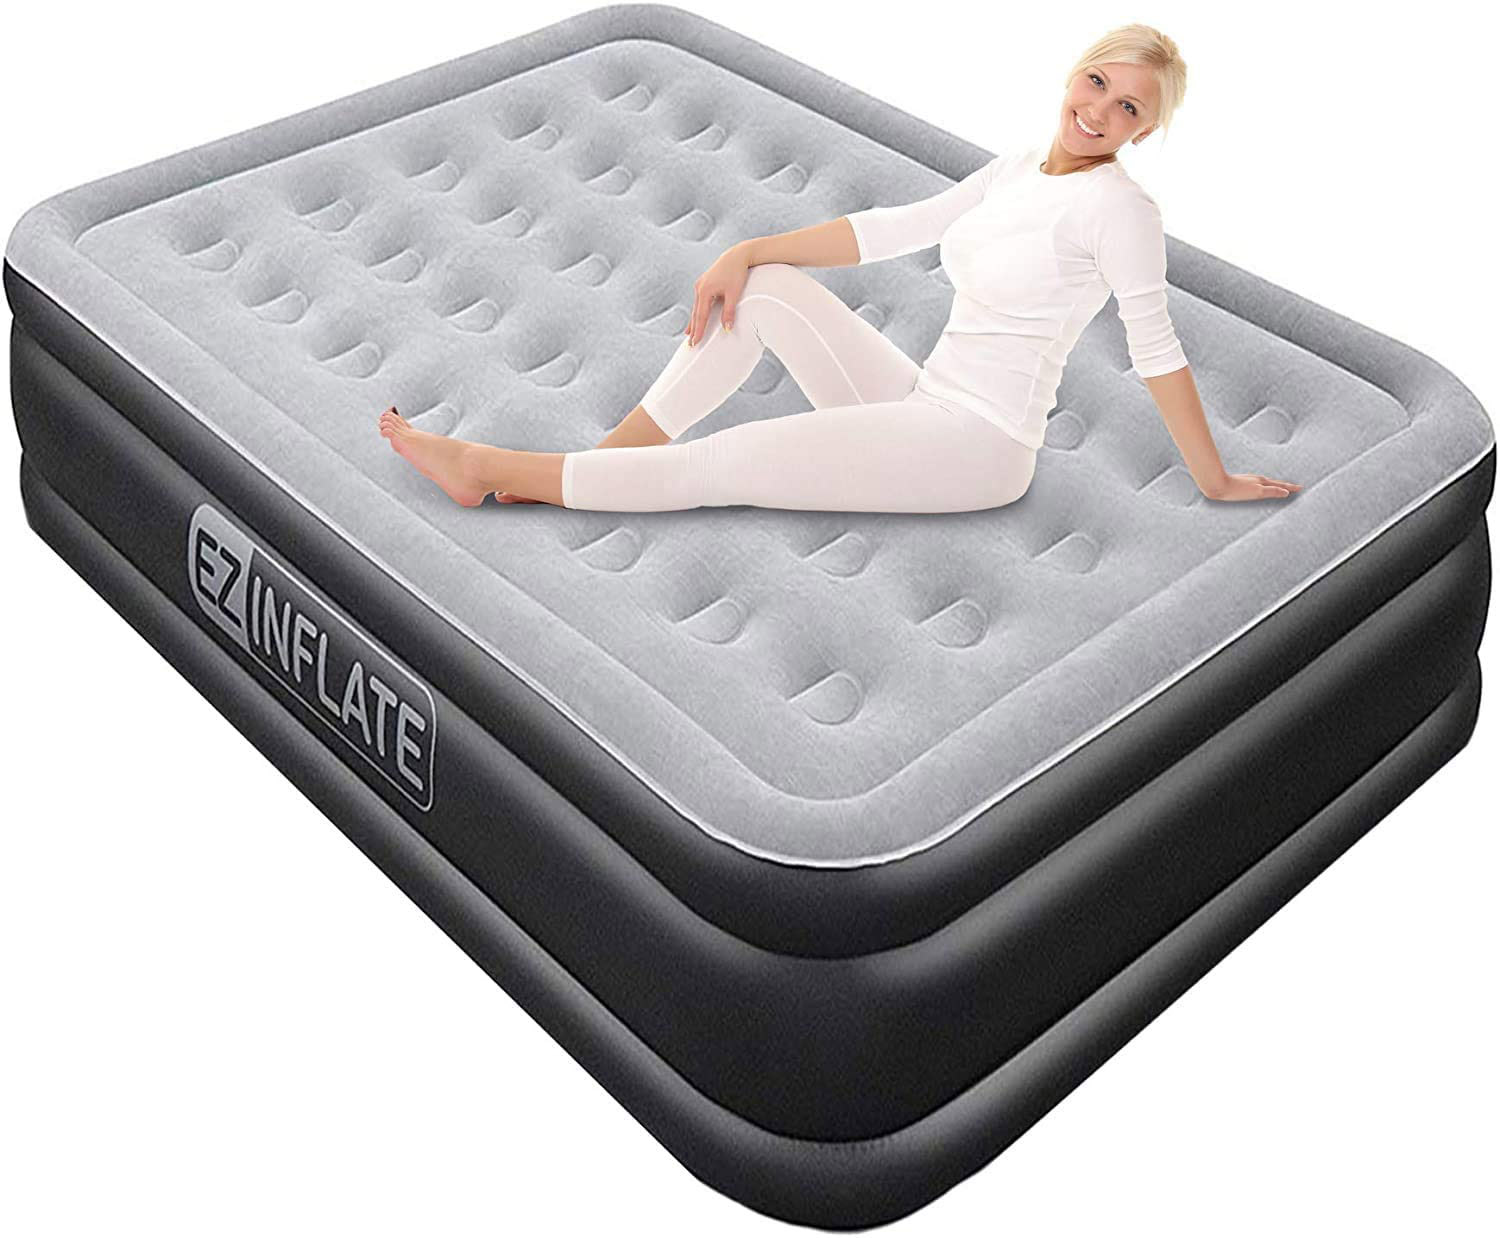 double air mattress camping